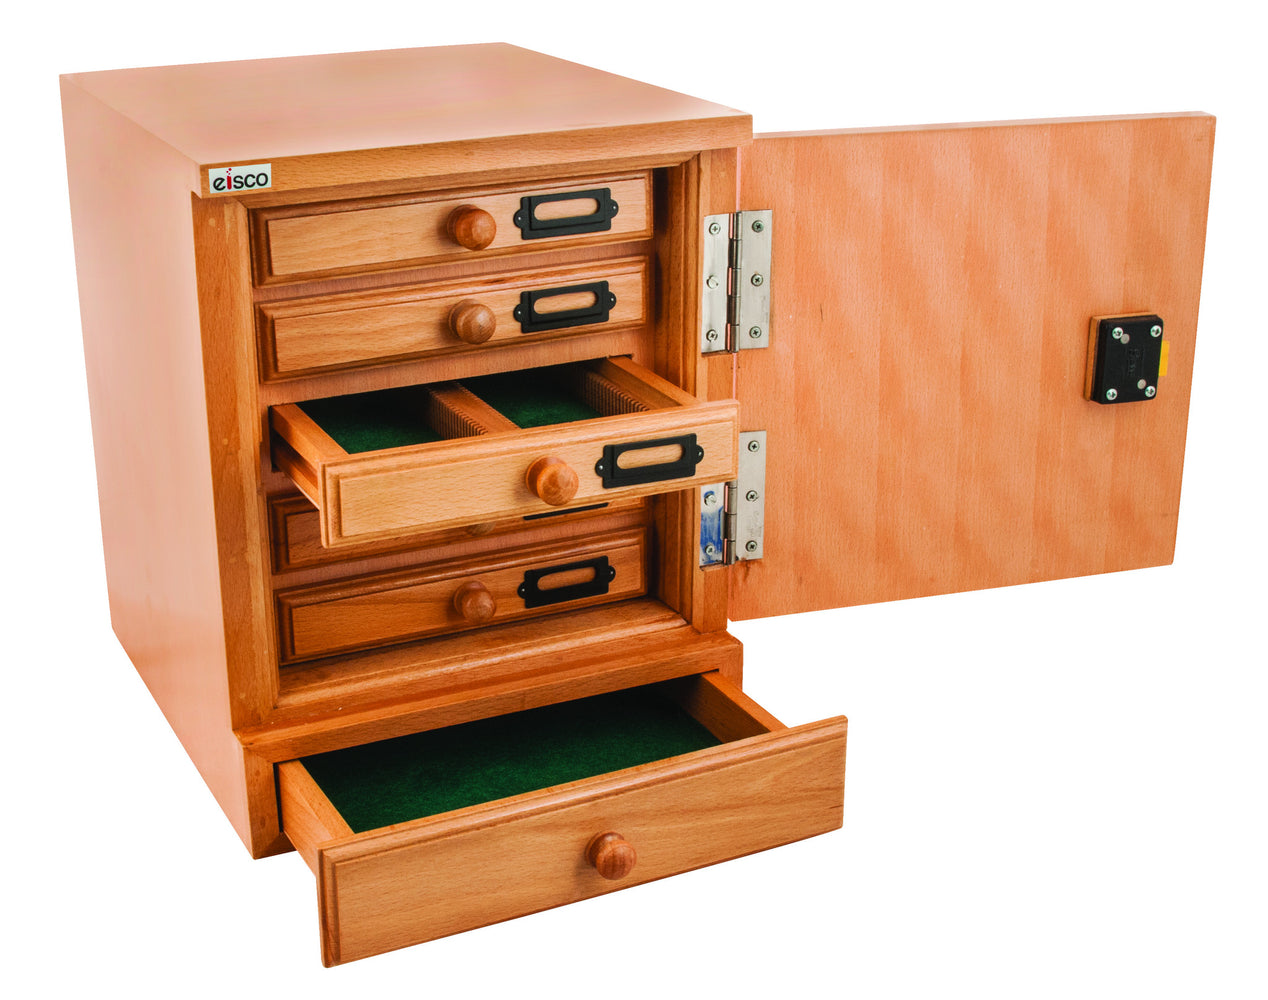 EISCO Wooden Slide Cabinet, 5 Drawers, 500 Slide Capacity Total